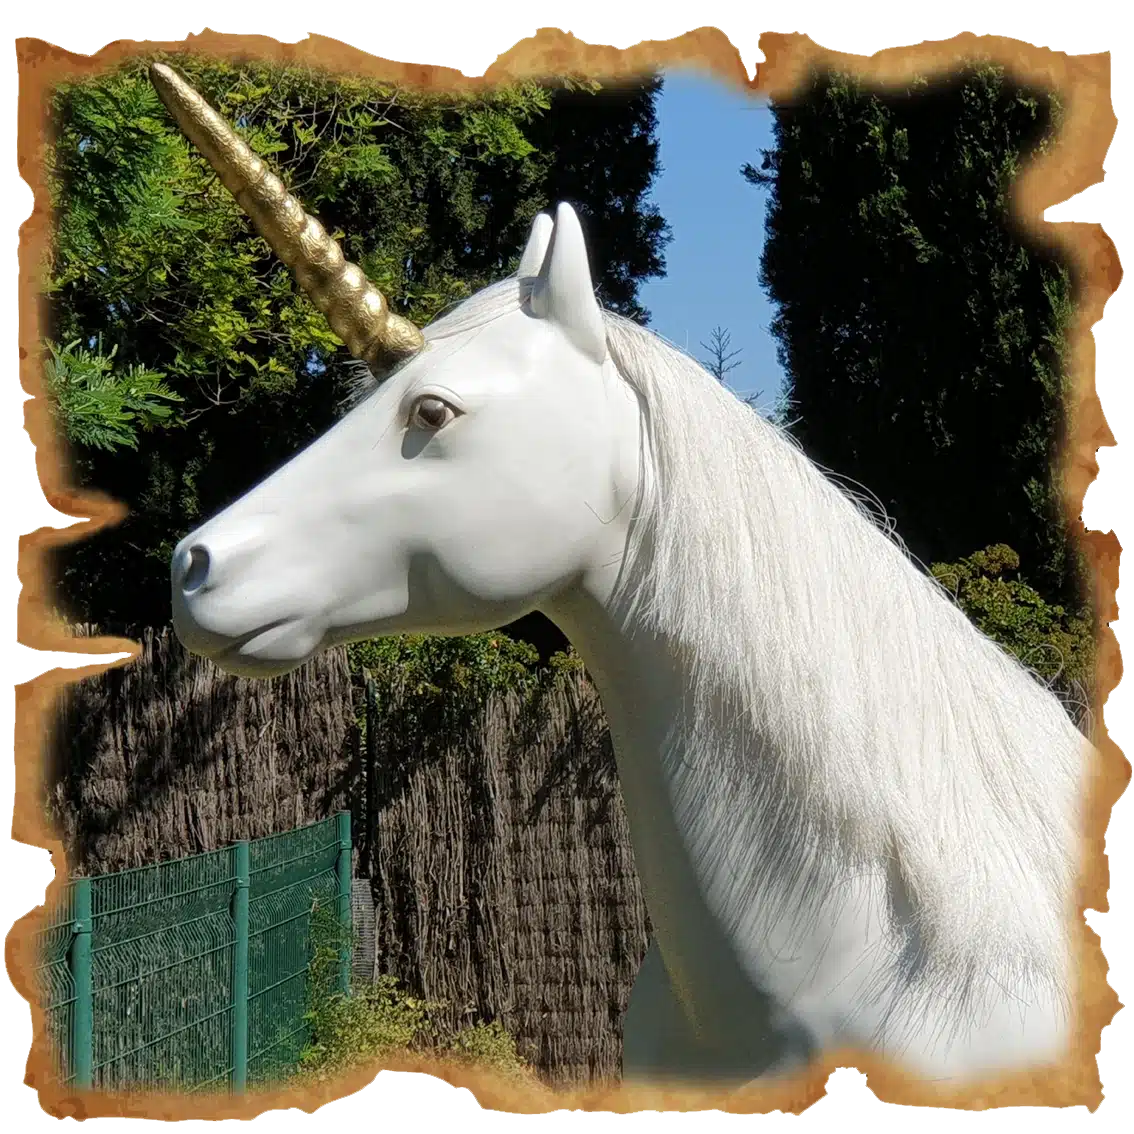 White unicorn at Fantassia amusement park